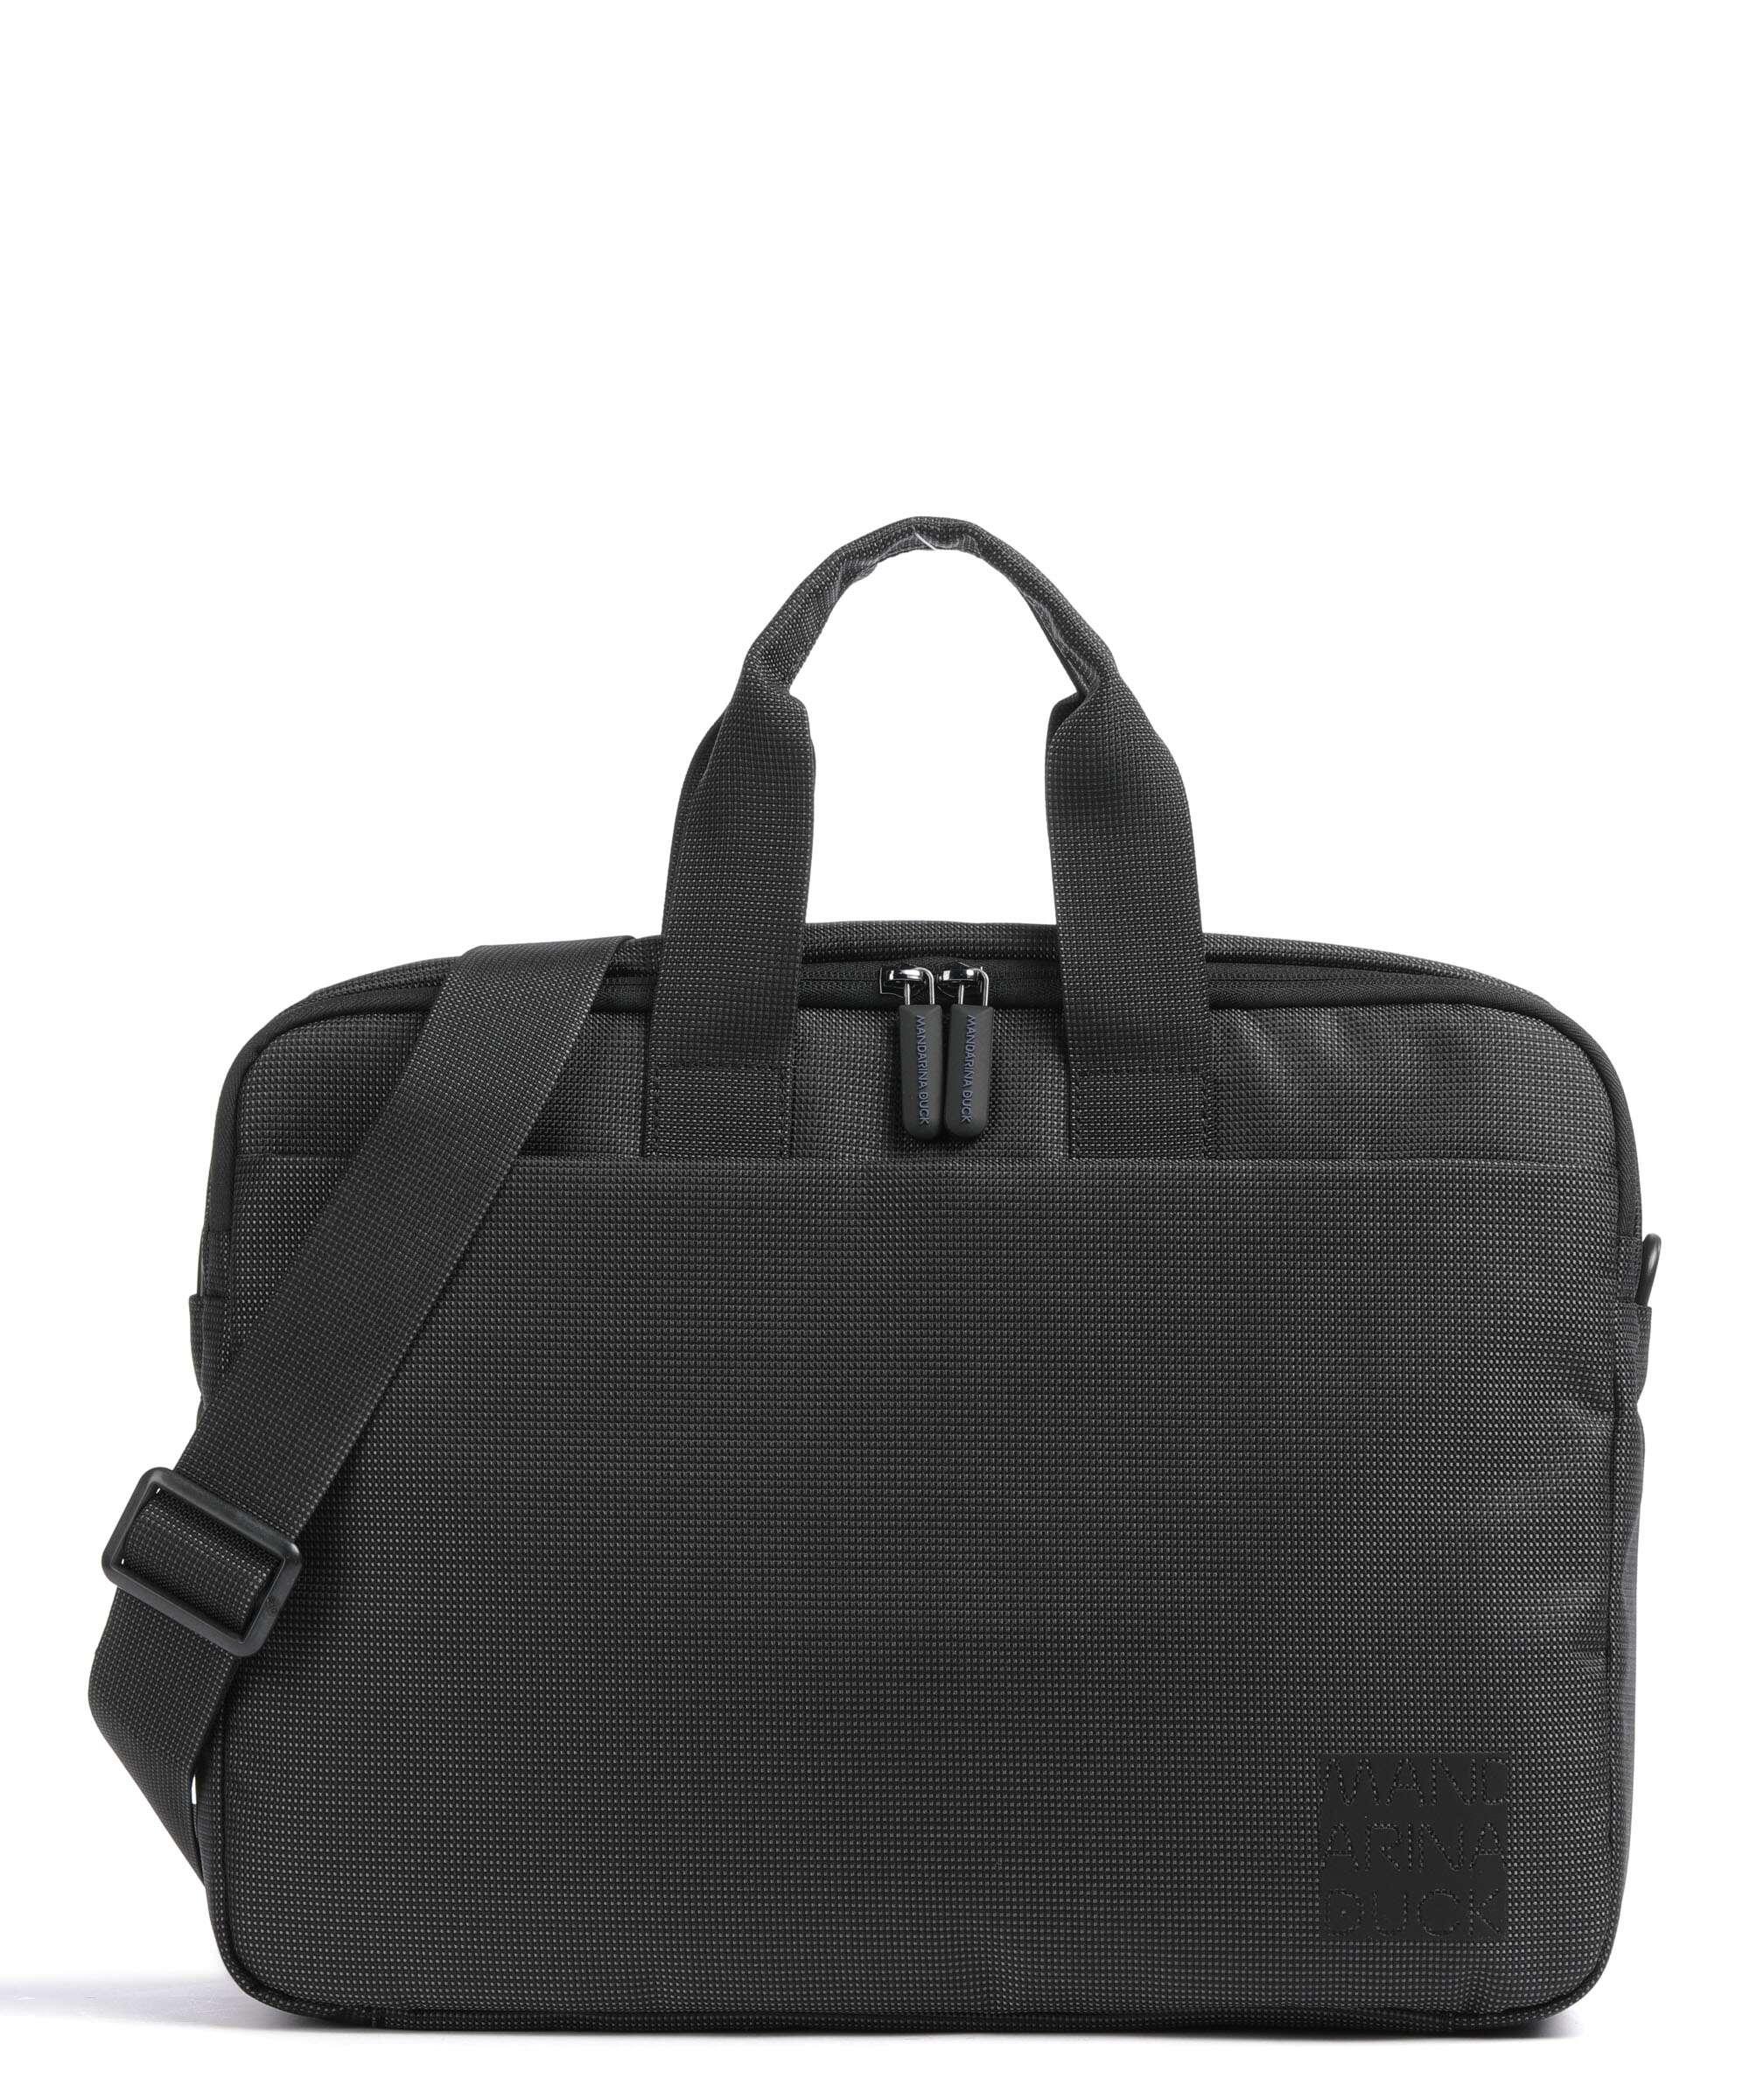 Buy Authentic MANDARINA DUCK Duffle Bags Online In India | Tata CLiQ Luxury